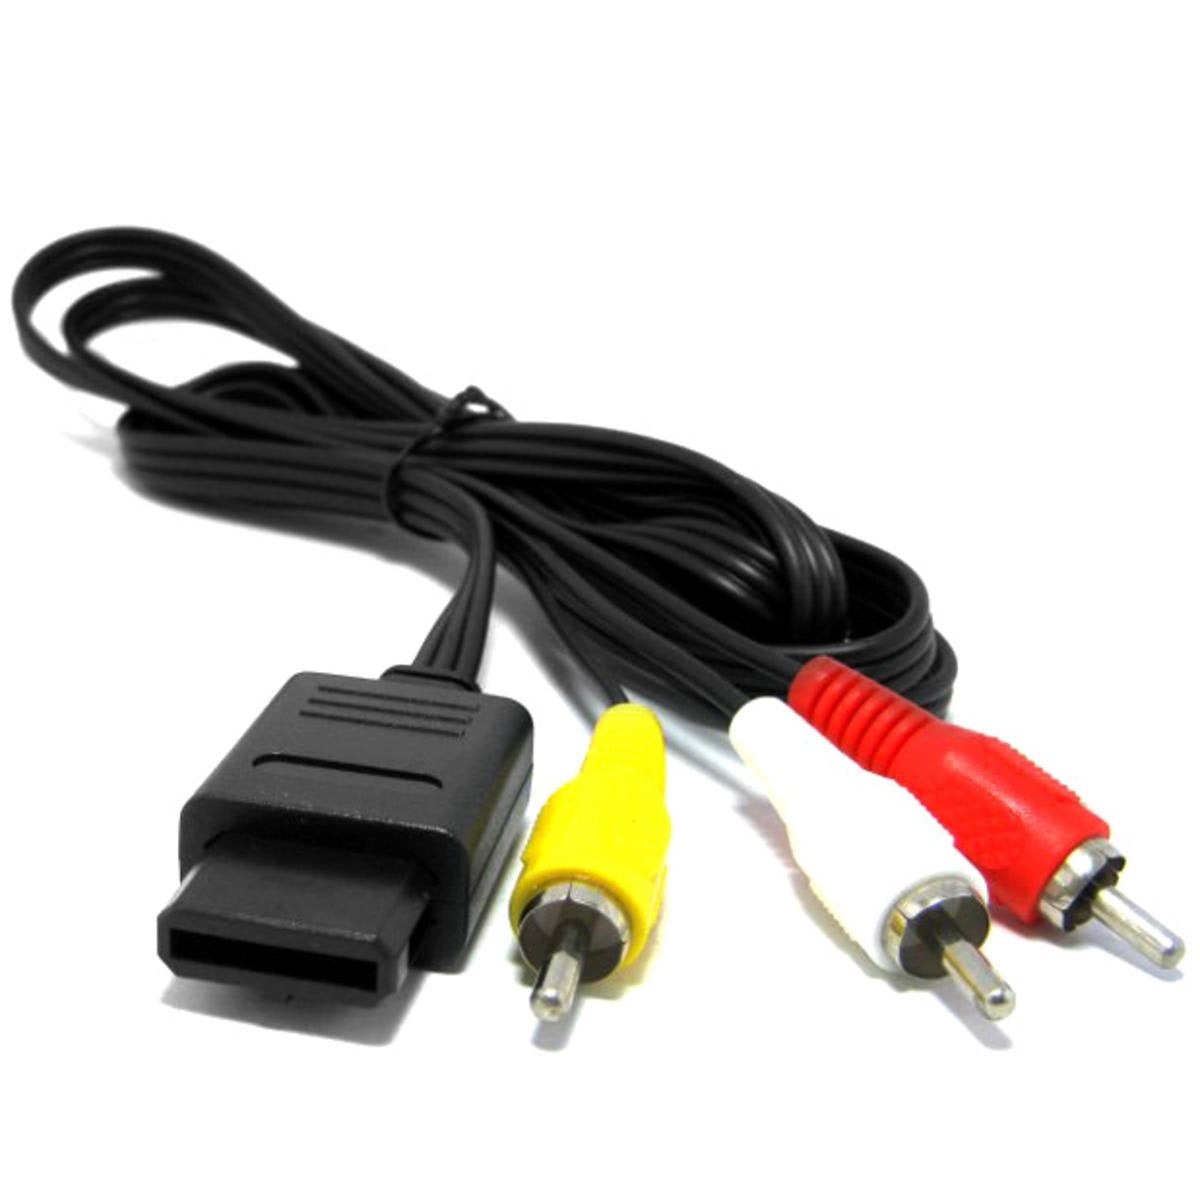 Snes / N64 / Gamecube AV Cable (TV RCA for Super Nintendo, Nintendo 64 and GC)